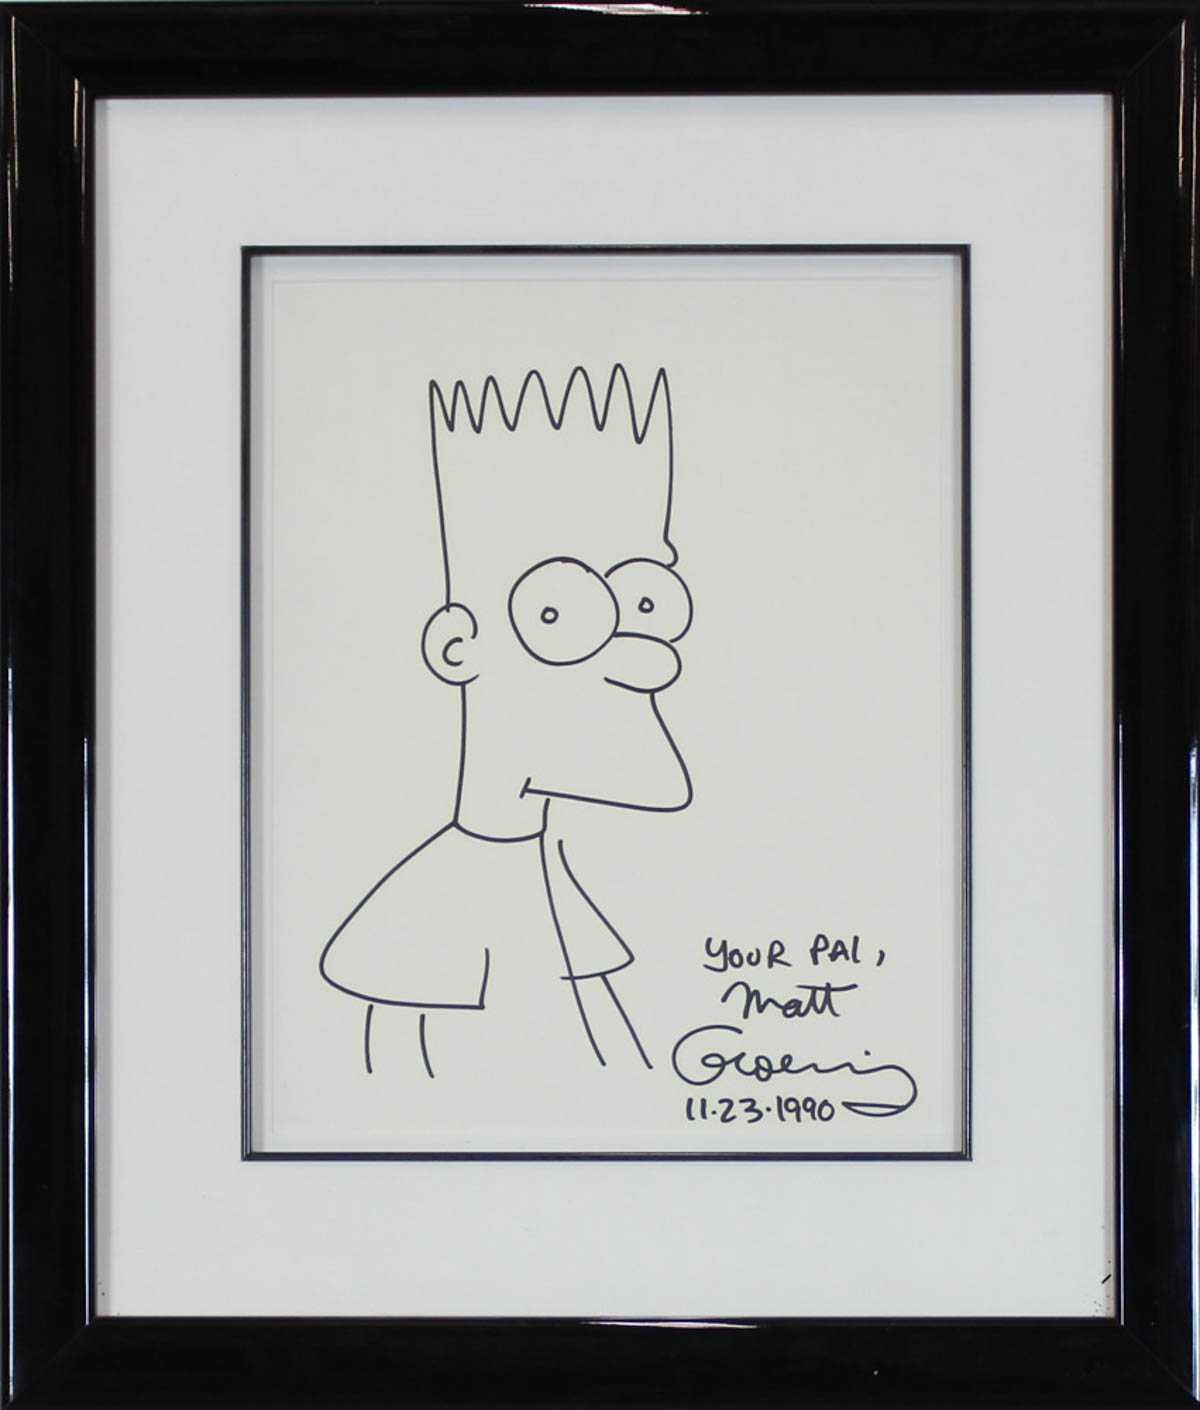 Bart Simpson by Matt Groening, 1990